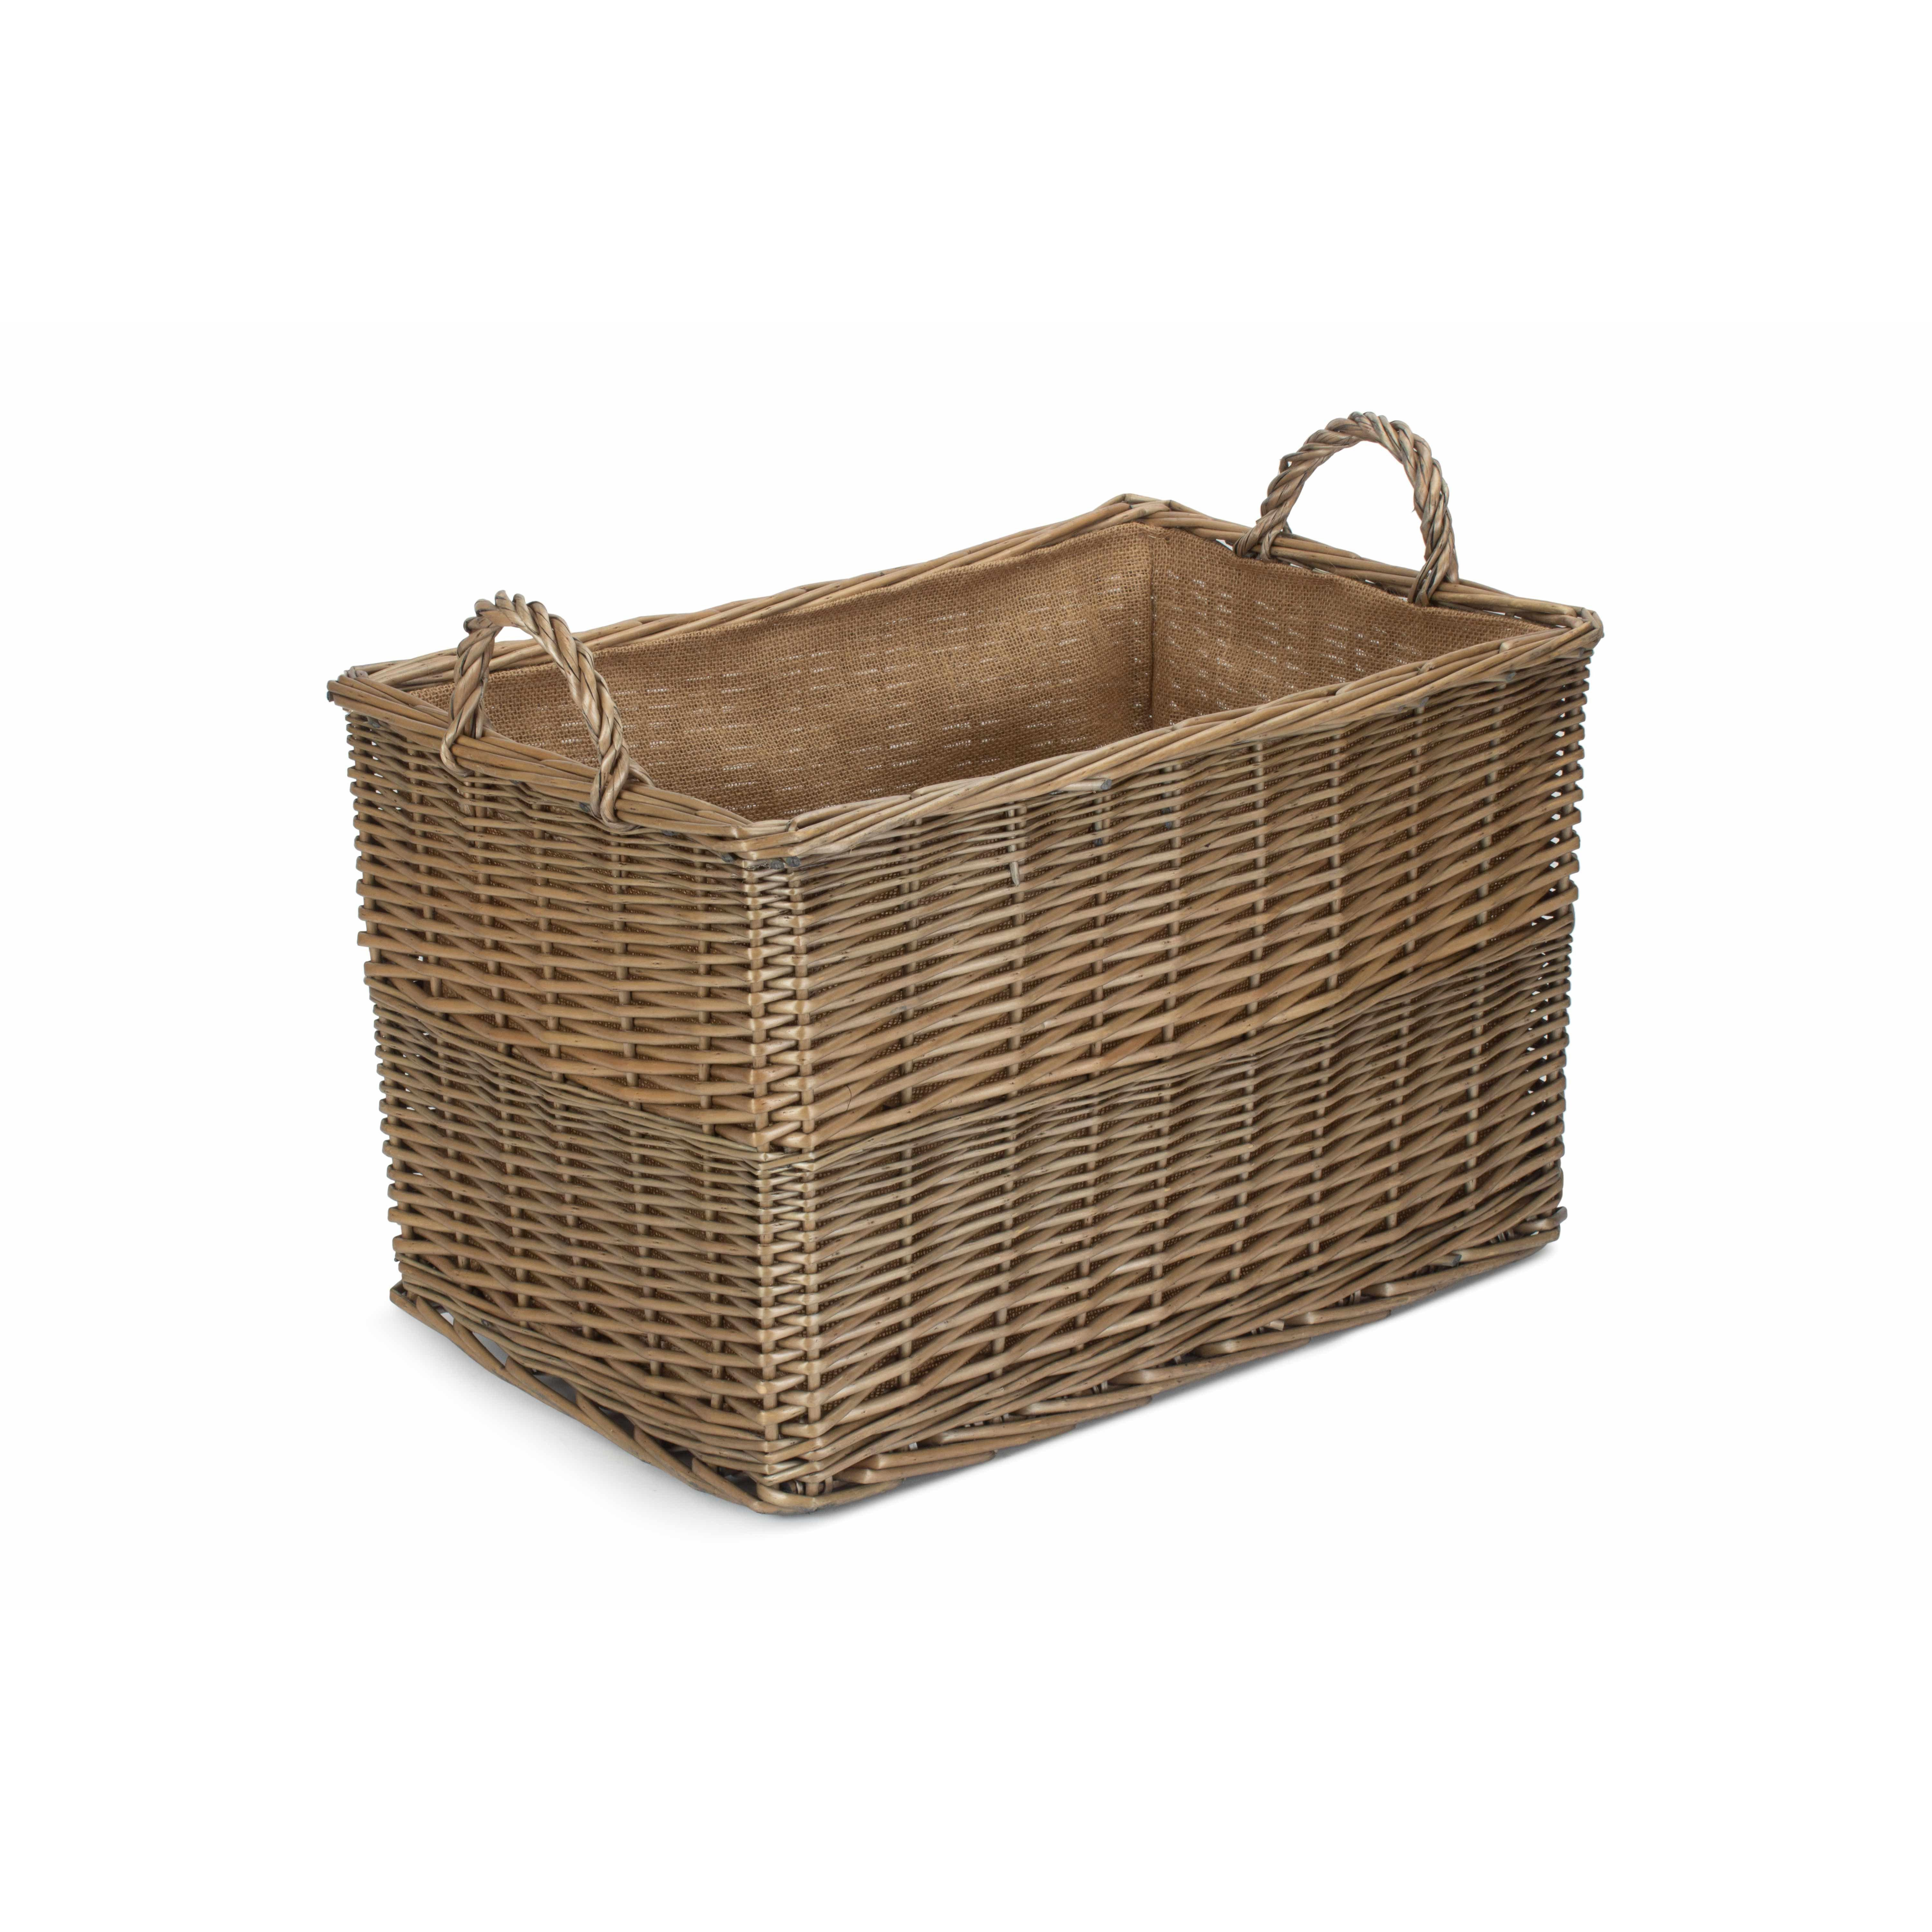 Wicker Antique Wash Rectangular Hessian Lined Basket - image 1